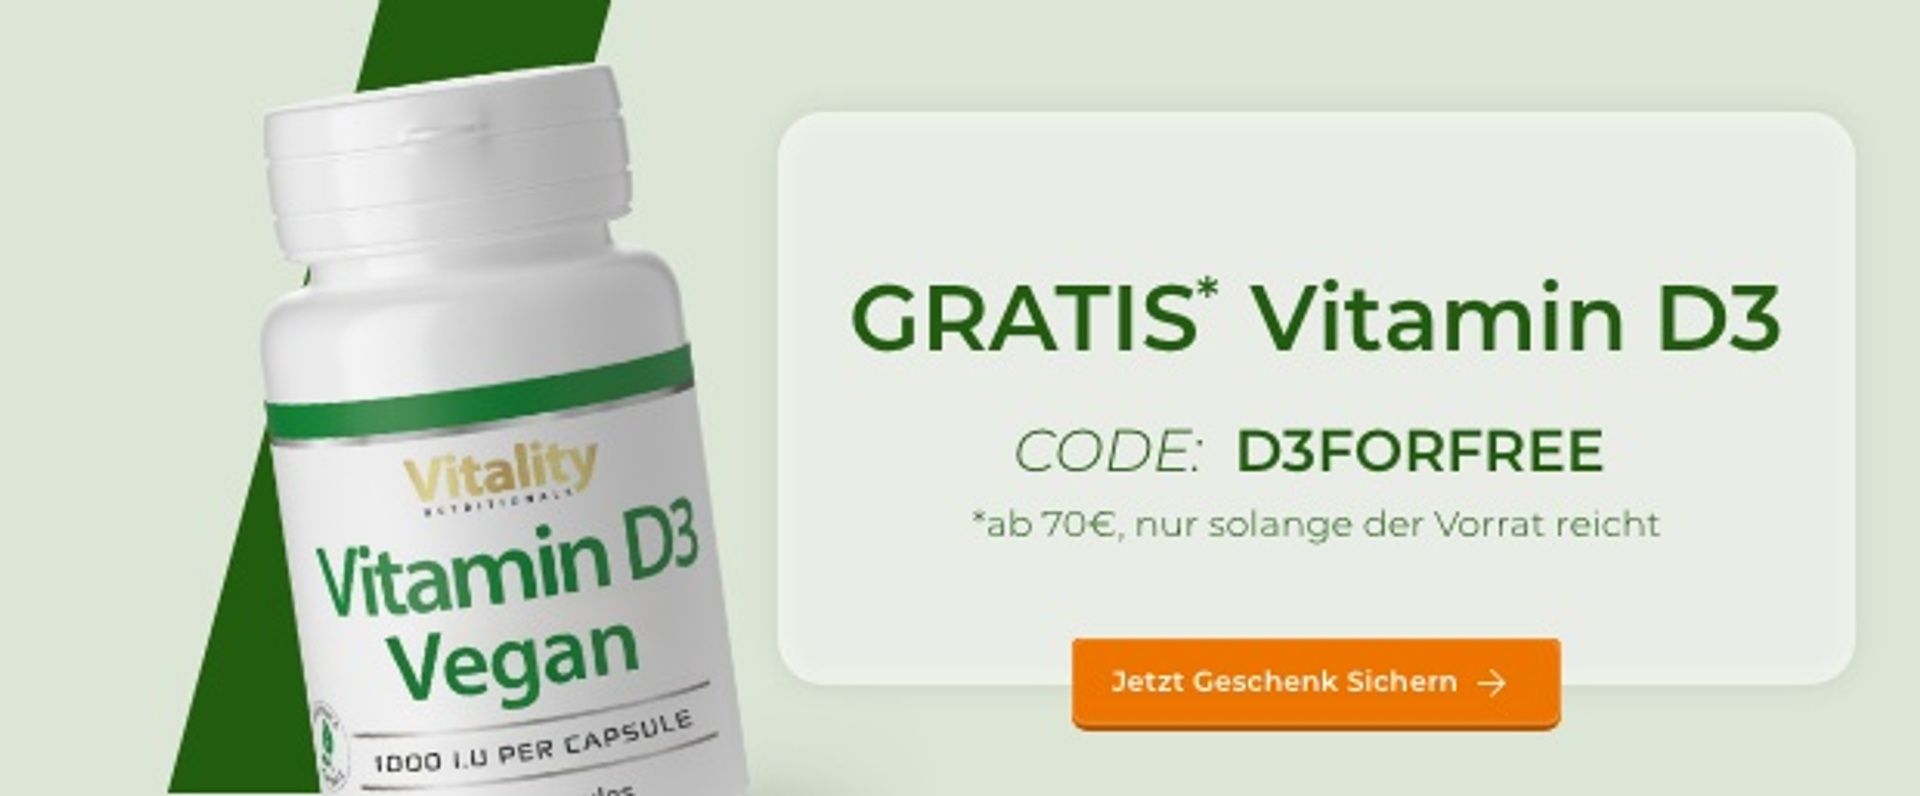 VE_GWP_Vitamin-D3_Vegan_1000_IE_620x257_DE.png